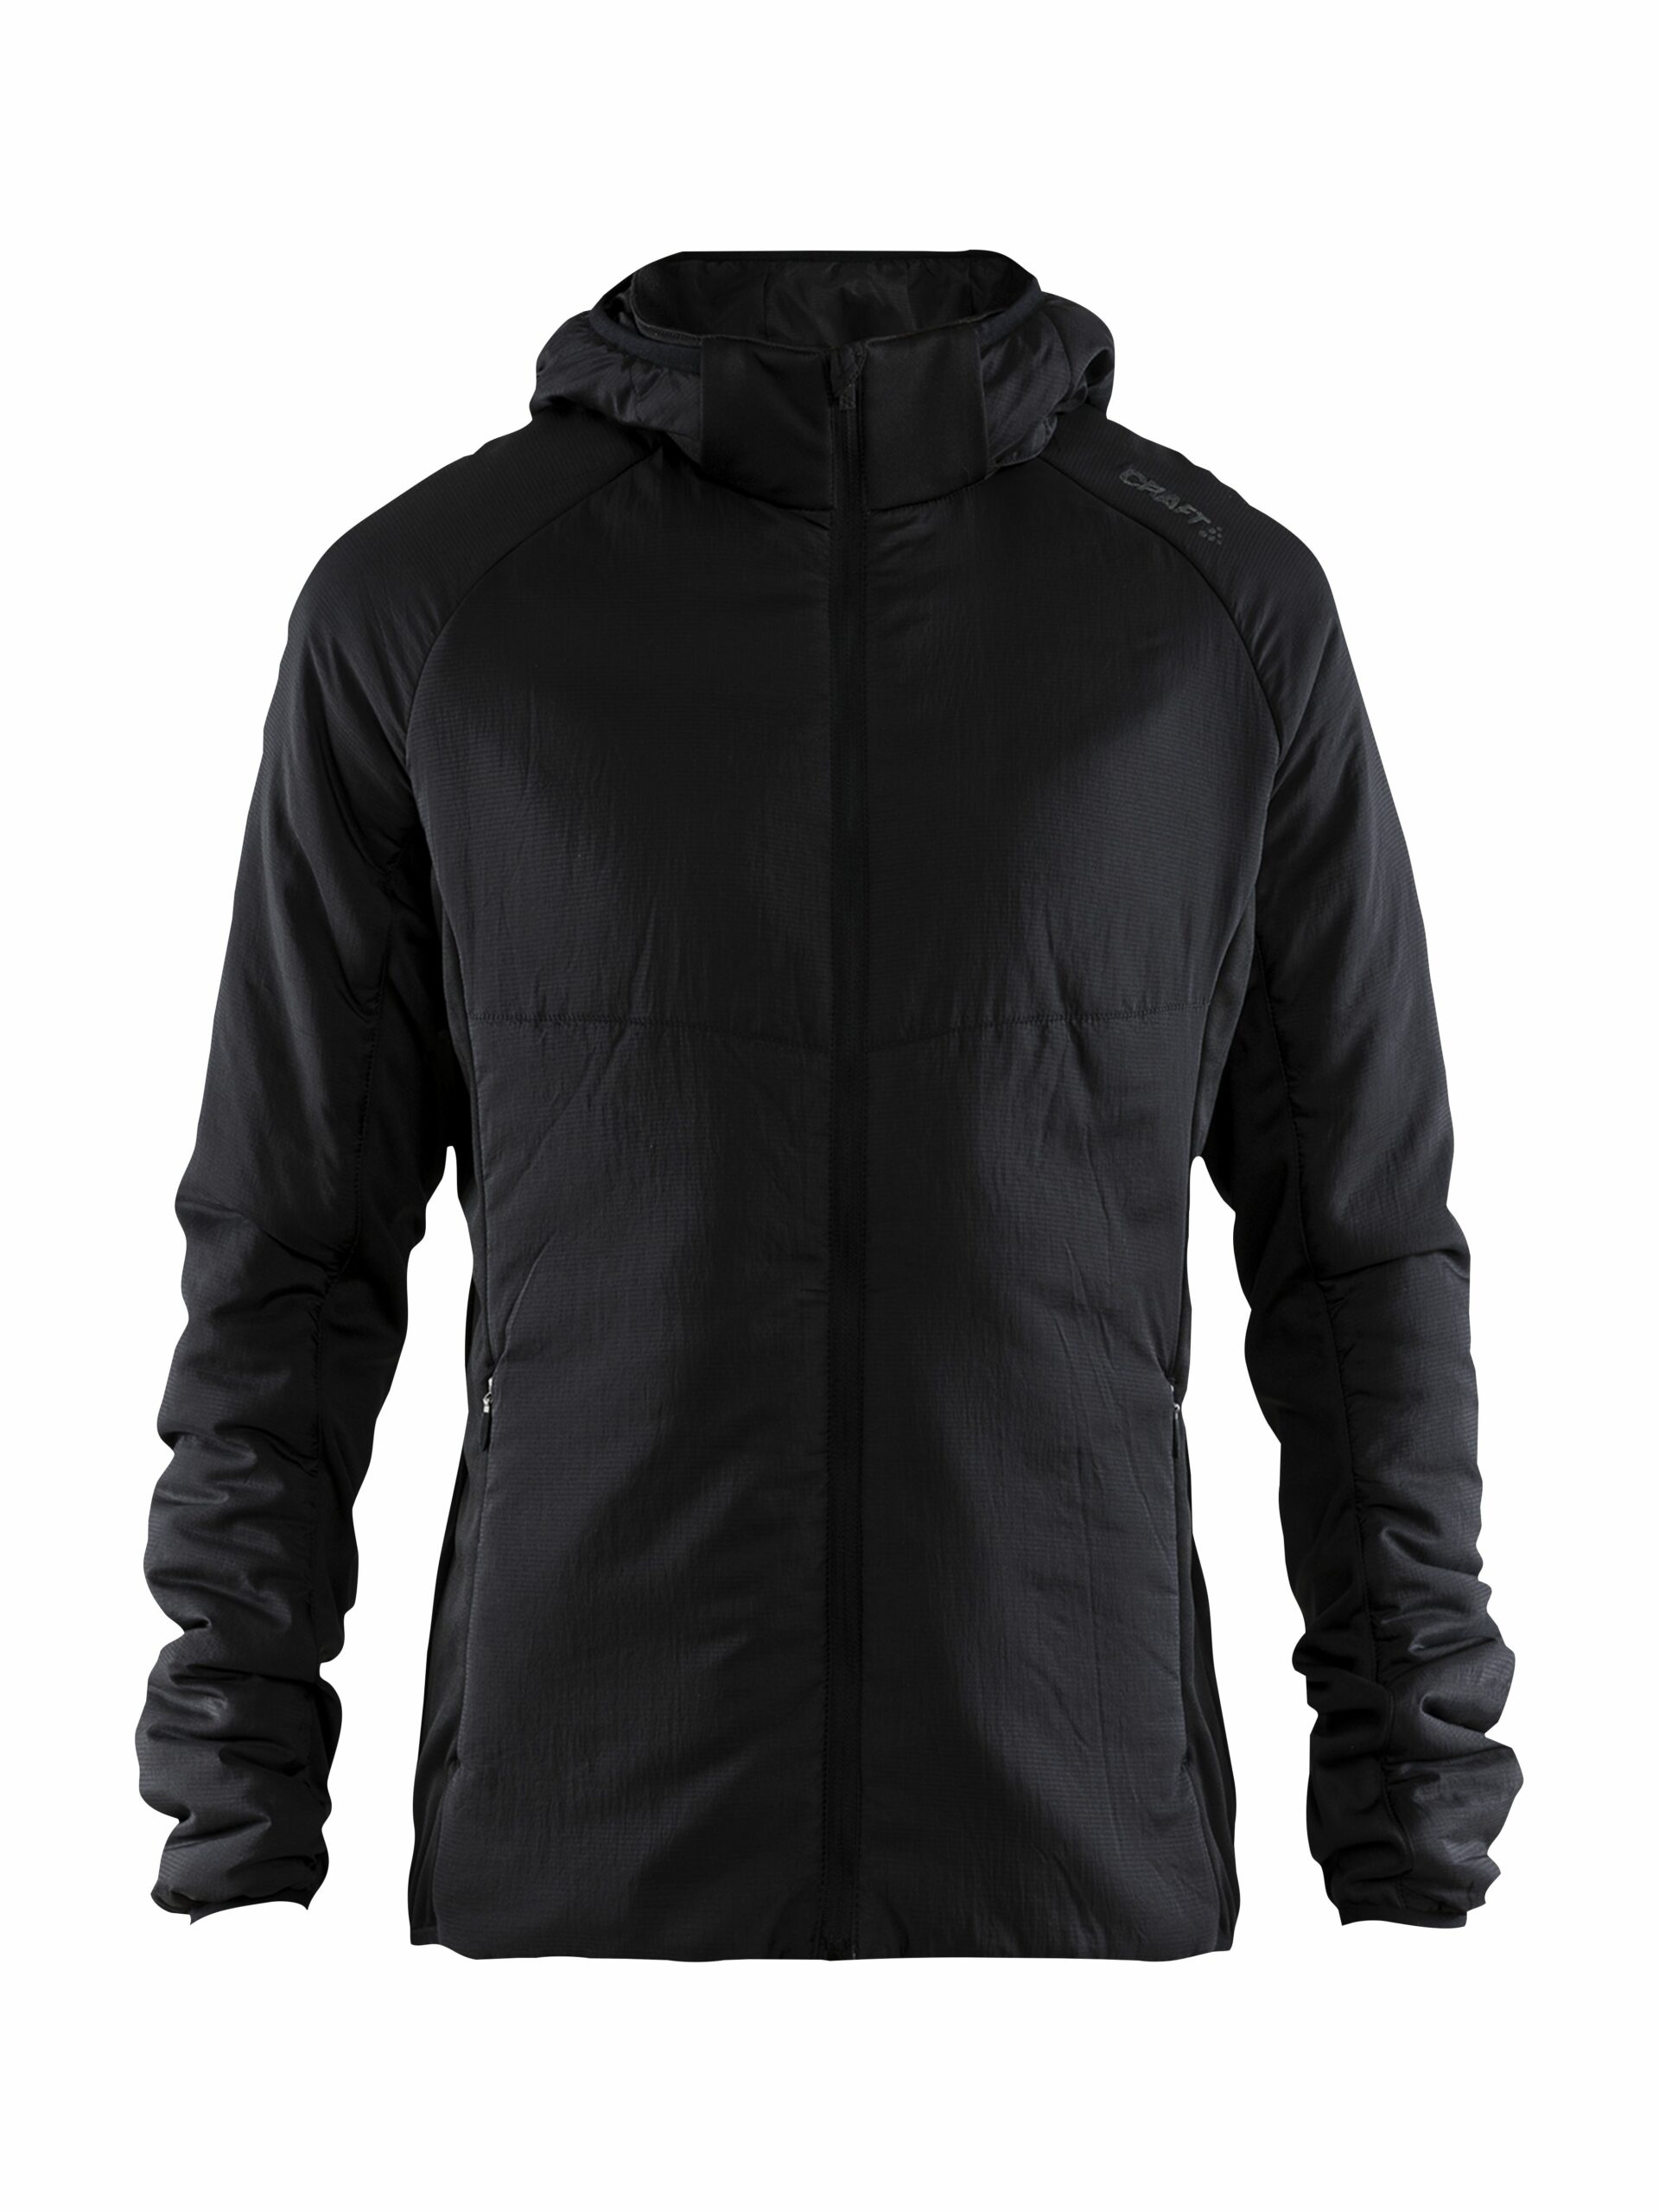 Craft - Emotion light padded jacket Maend - Black S